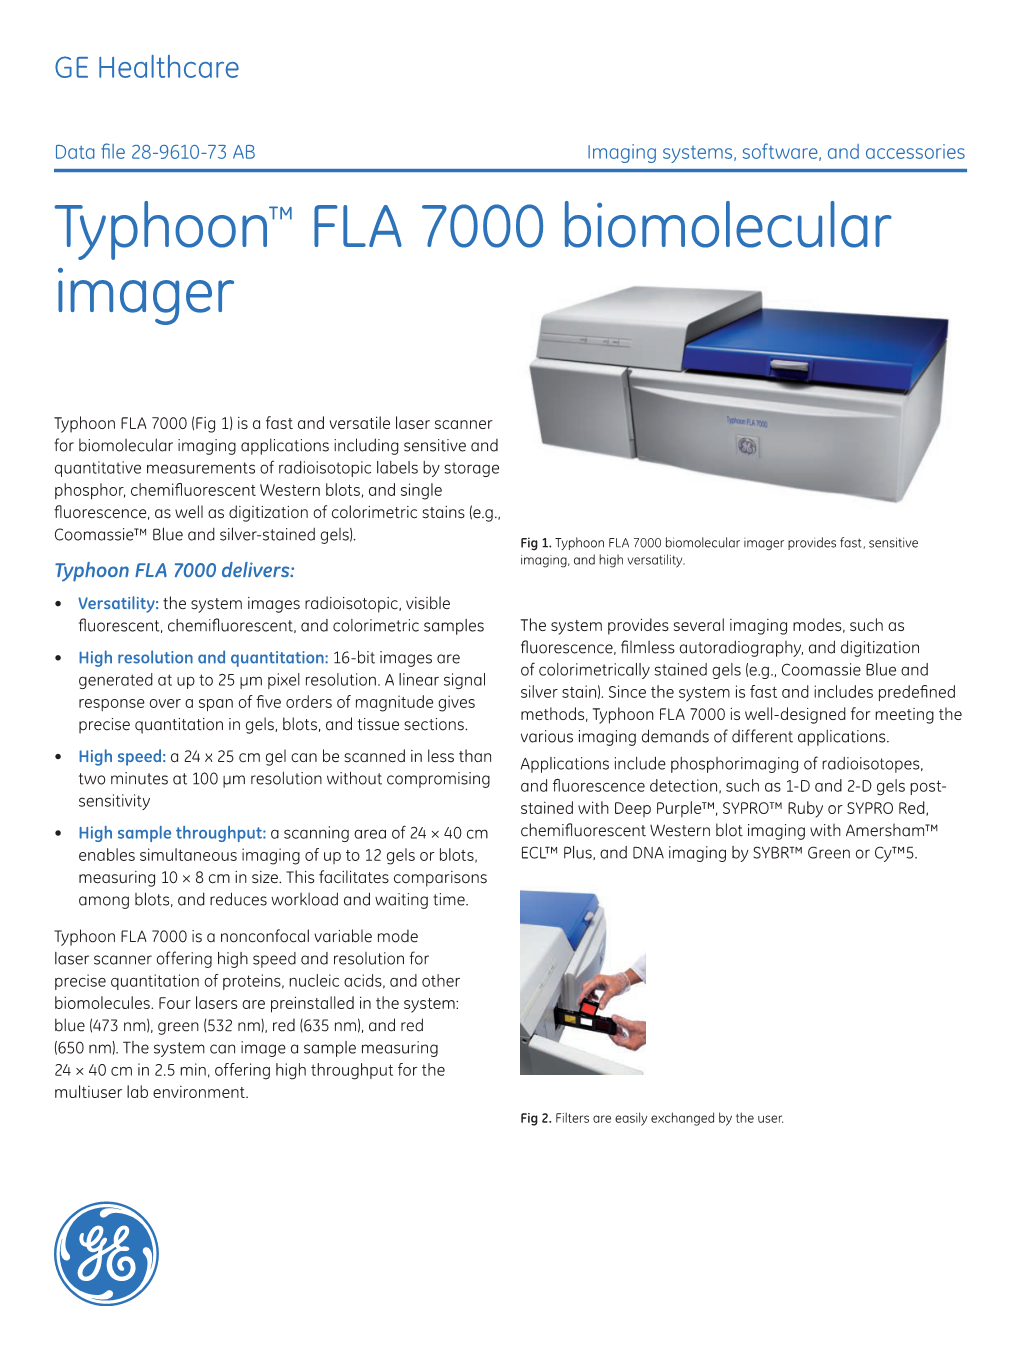 Typhoon™ FLA 7000 Biomolecular Imager